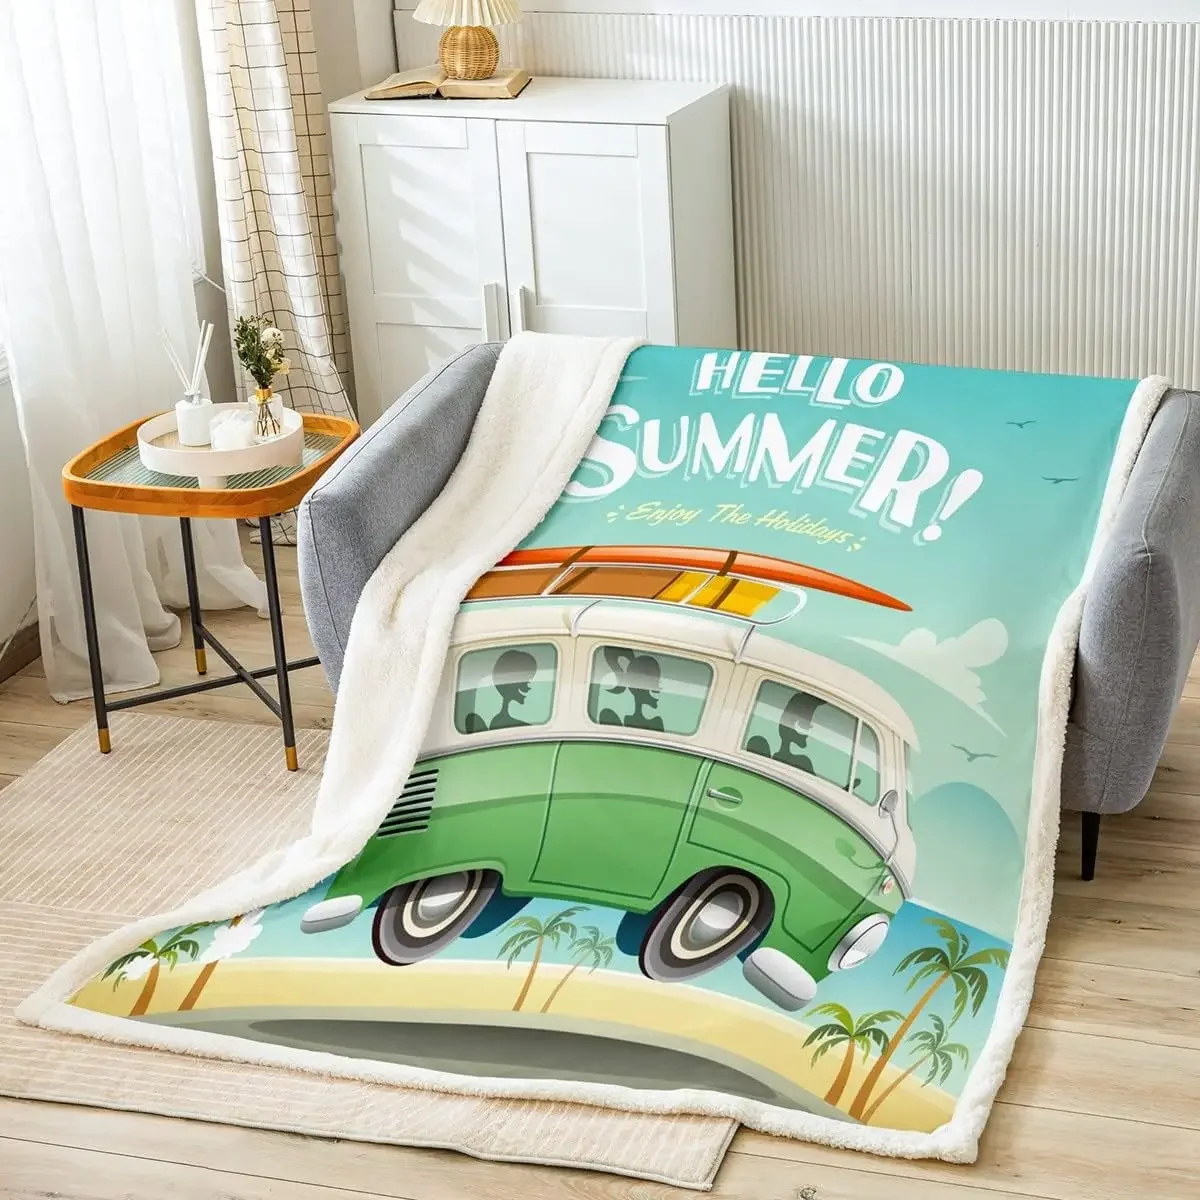 Summer Camping Blankets Cartoon Bus Van Throw Blanket for Kids Girls Boys Adults Room Decor Beach Palm Trees Fleece